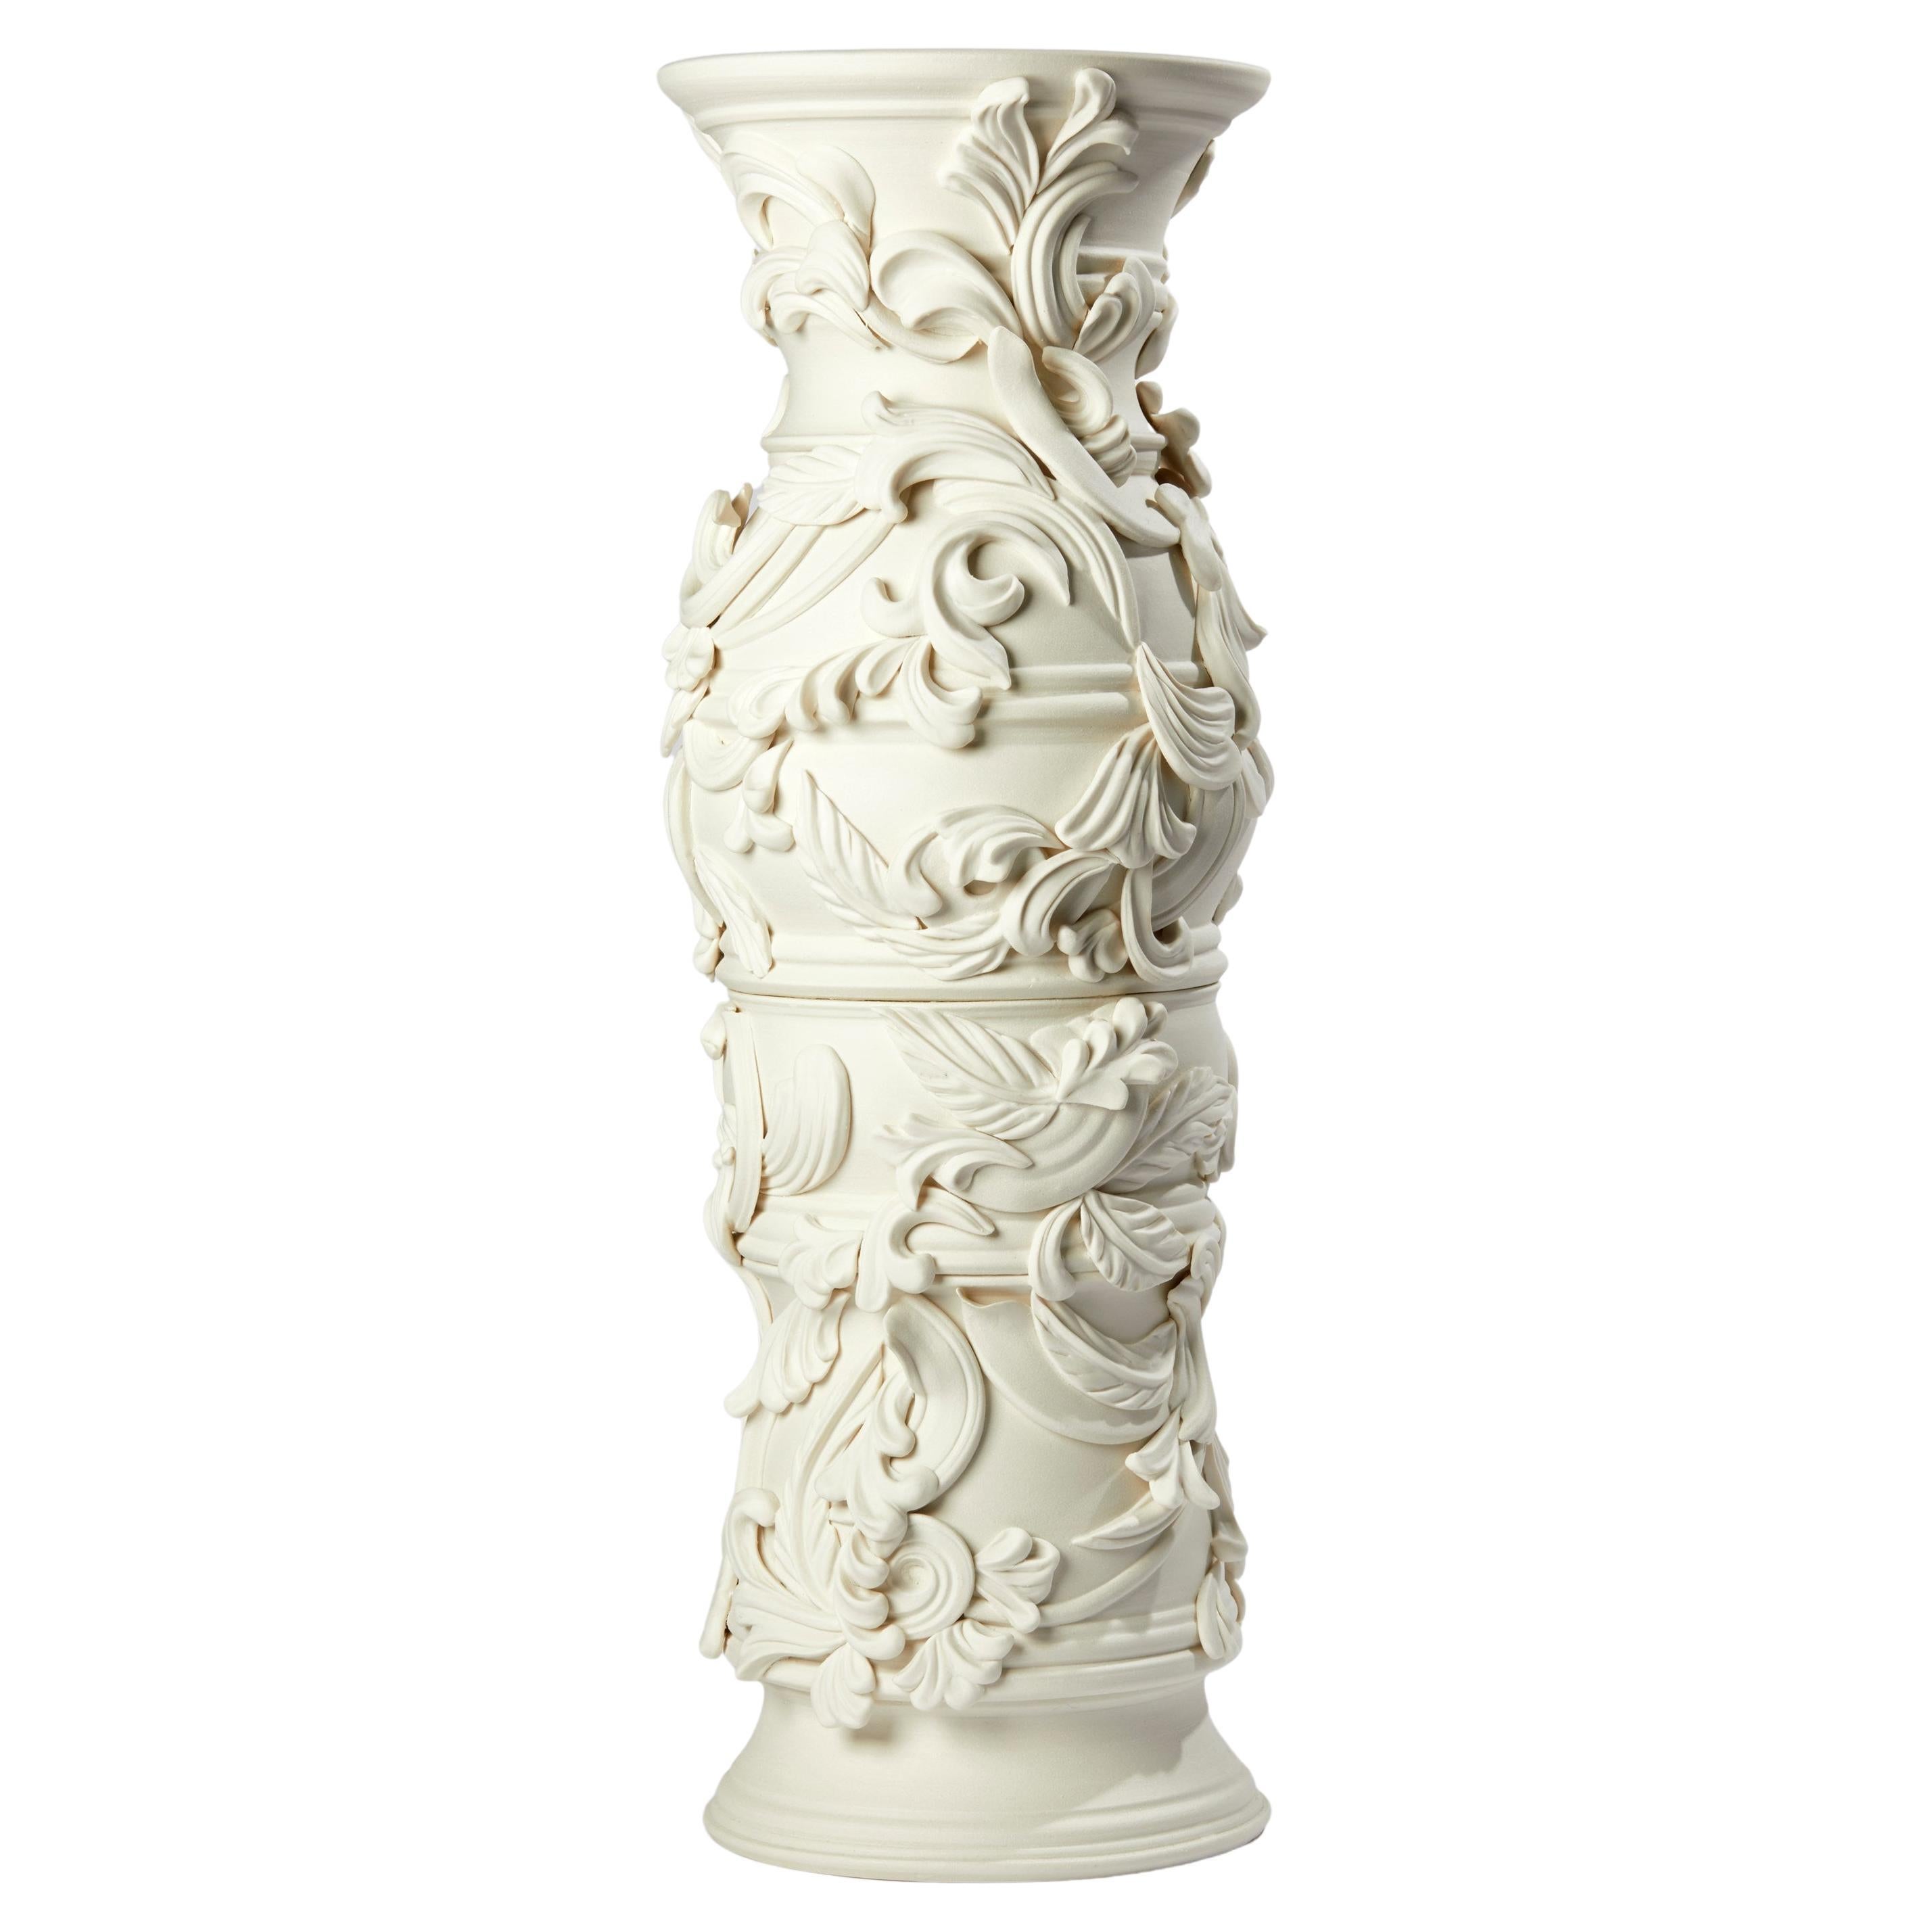 Promenade II, a Unique Ceramic Sculptural Tall Vase in Porcelain by Jo Taylor